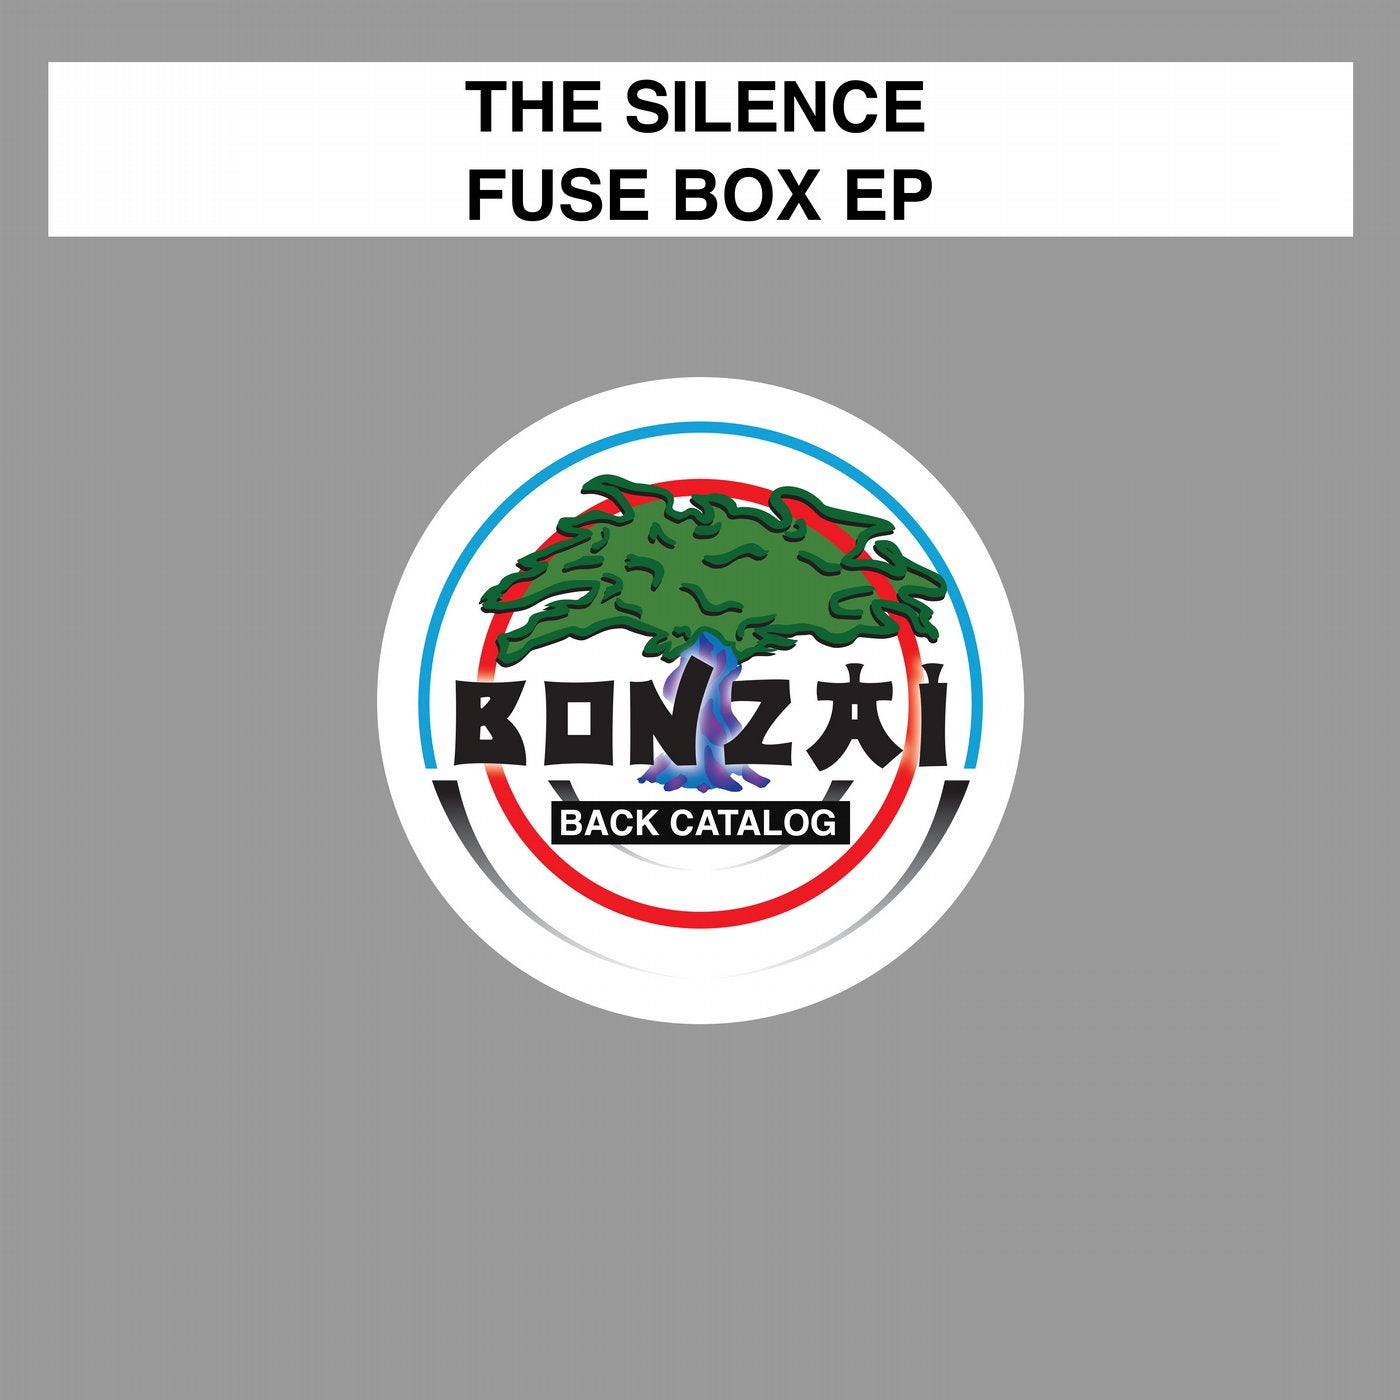 Fuse Box EP